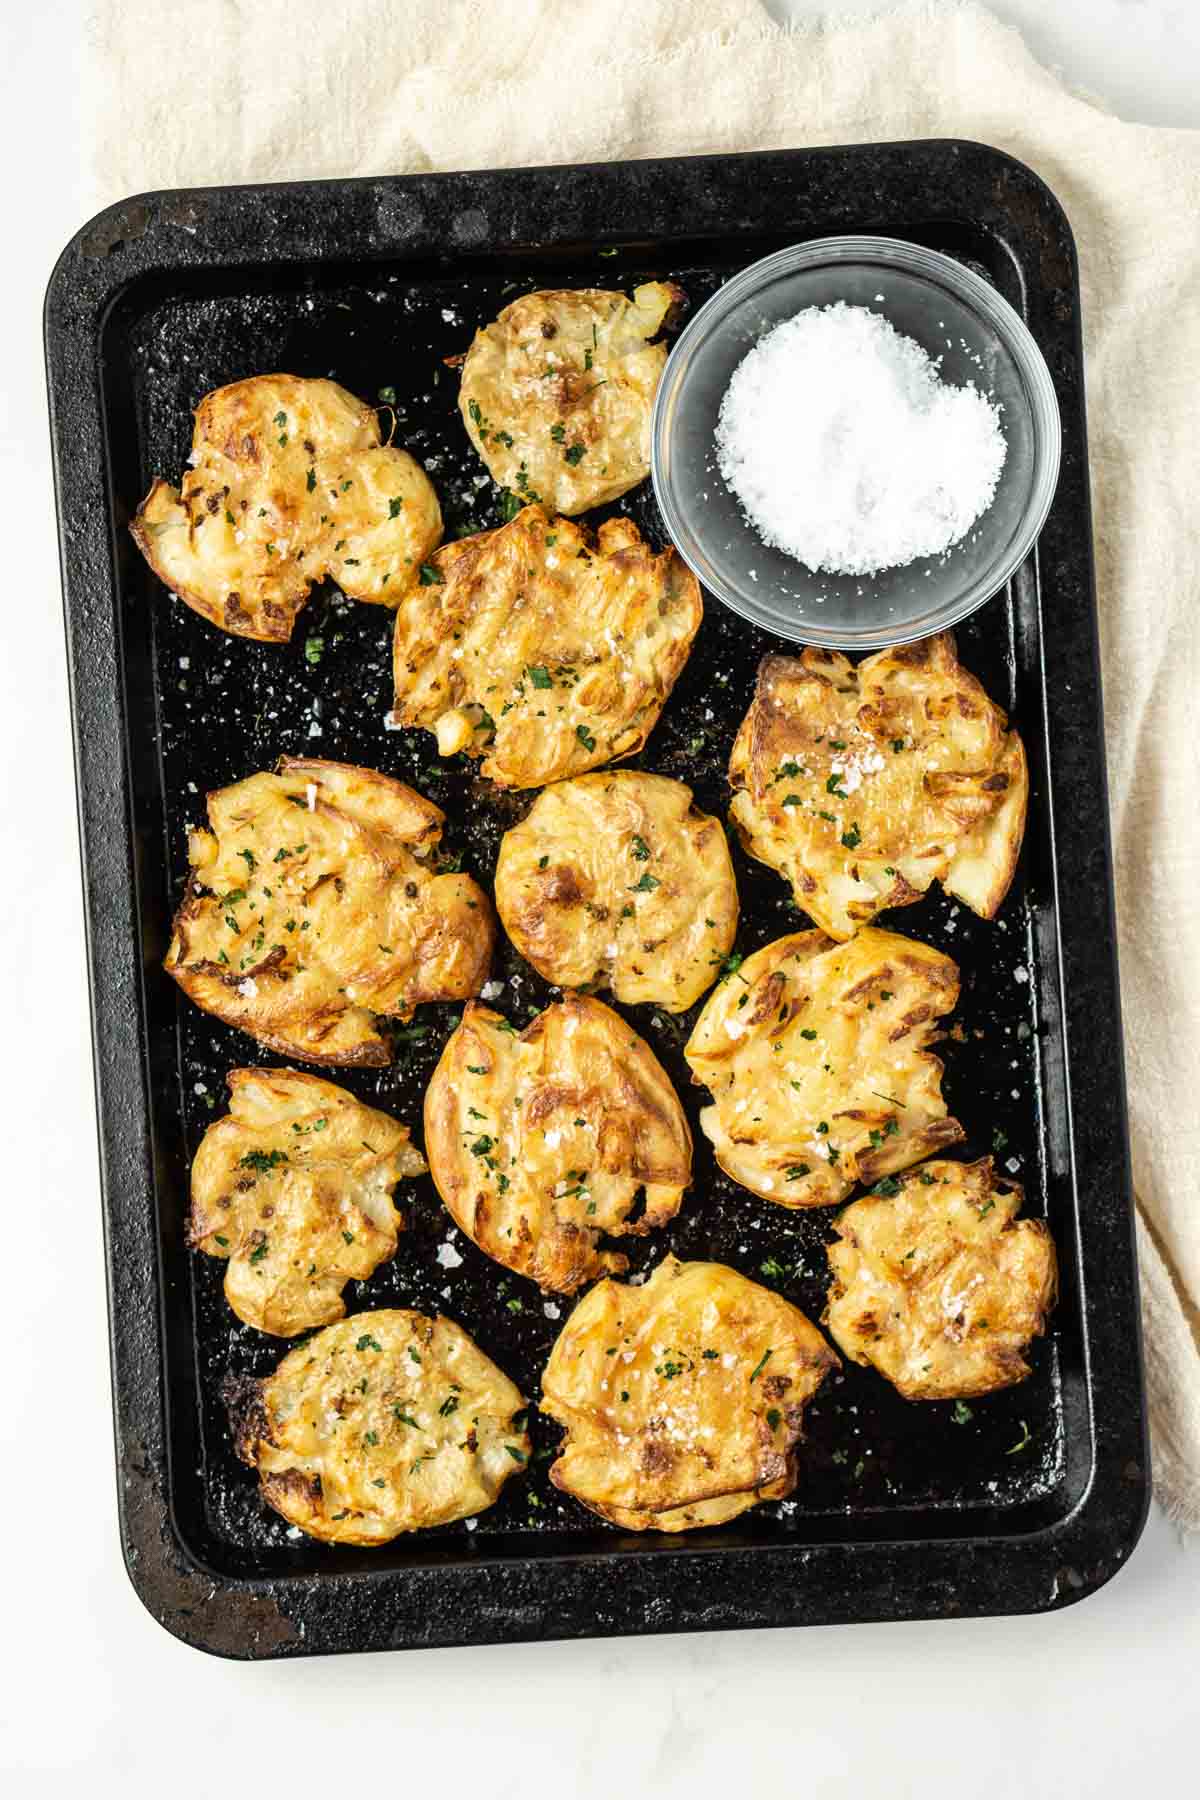 Crispy salt and vinegar potatoes on a baking tray with flaky sea salt